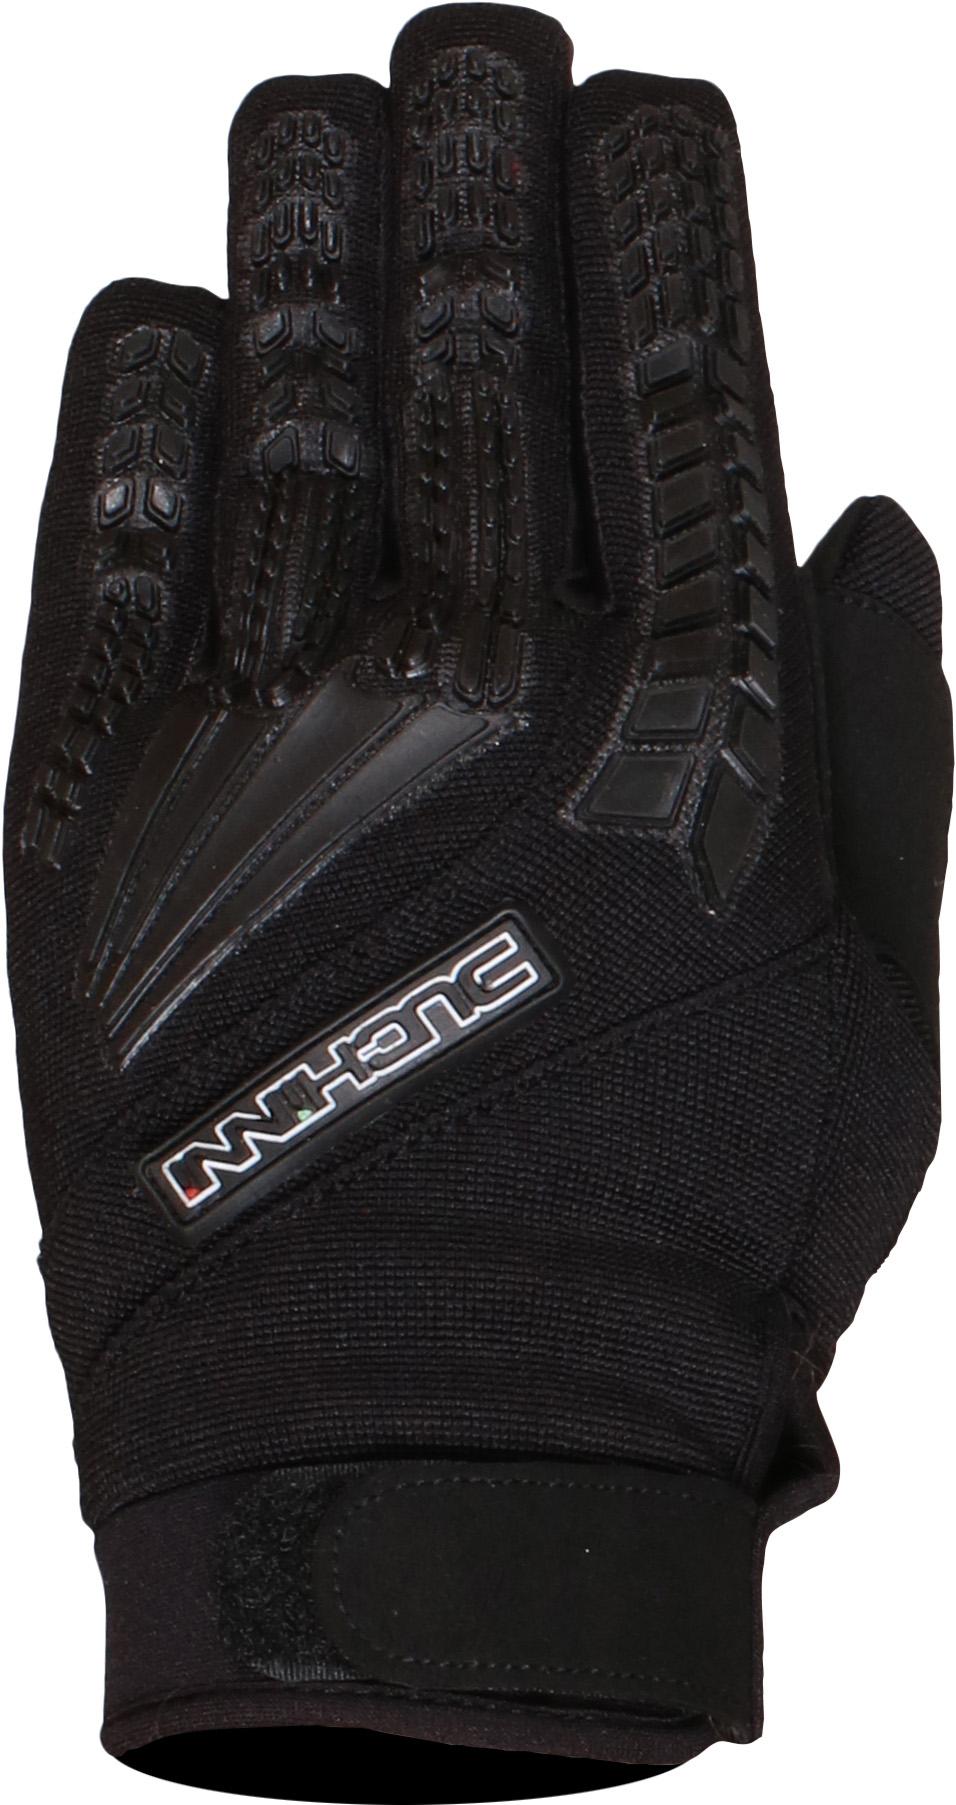 Duchinni Focus Motorcycle Gloves - Black, L